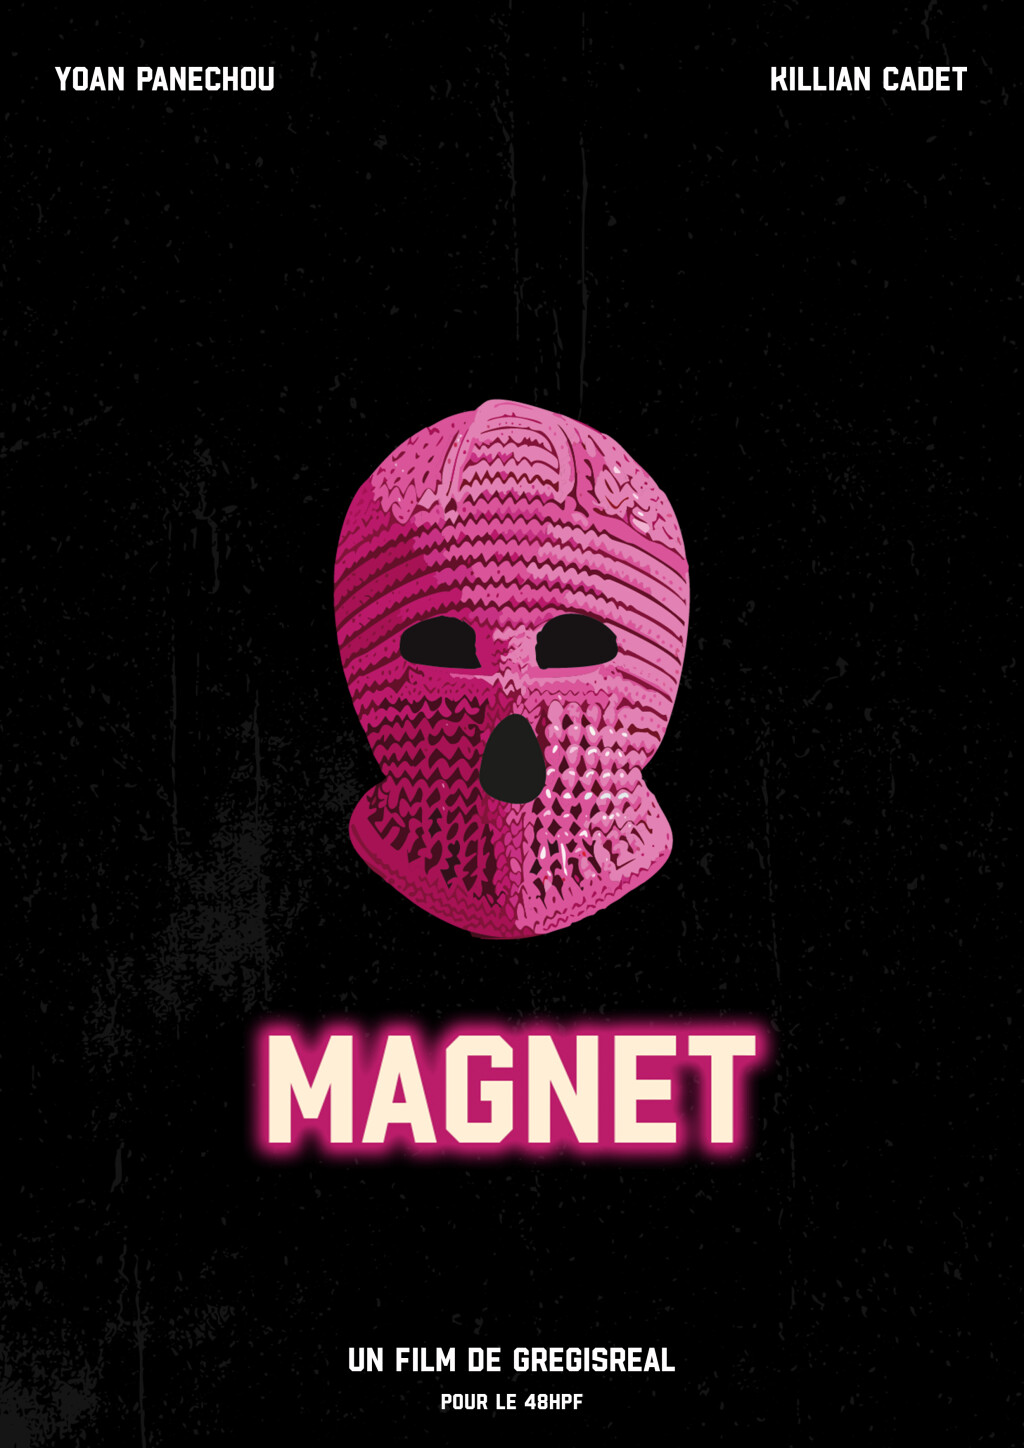 Filmposter for MAGNET